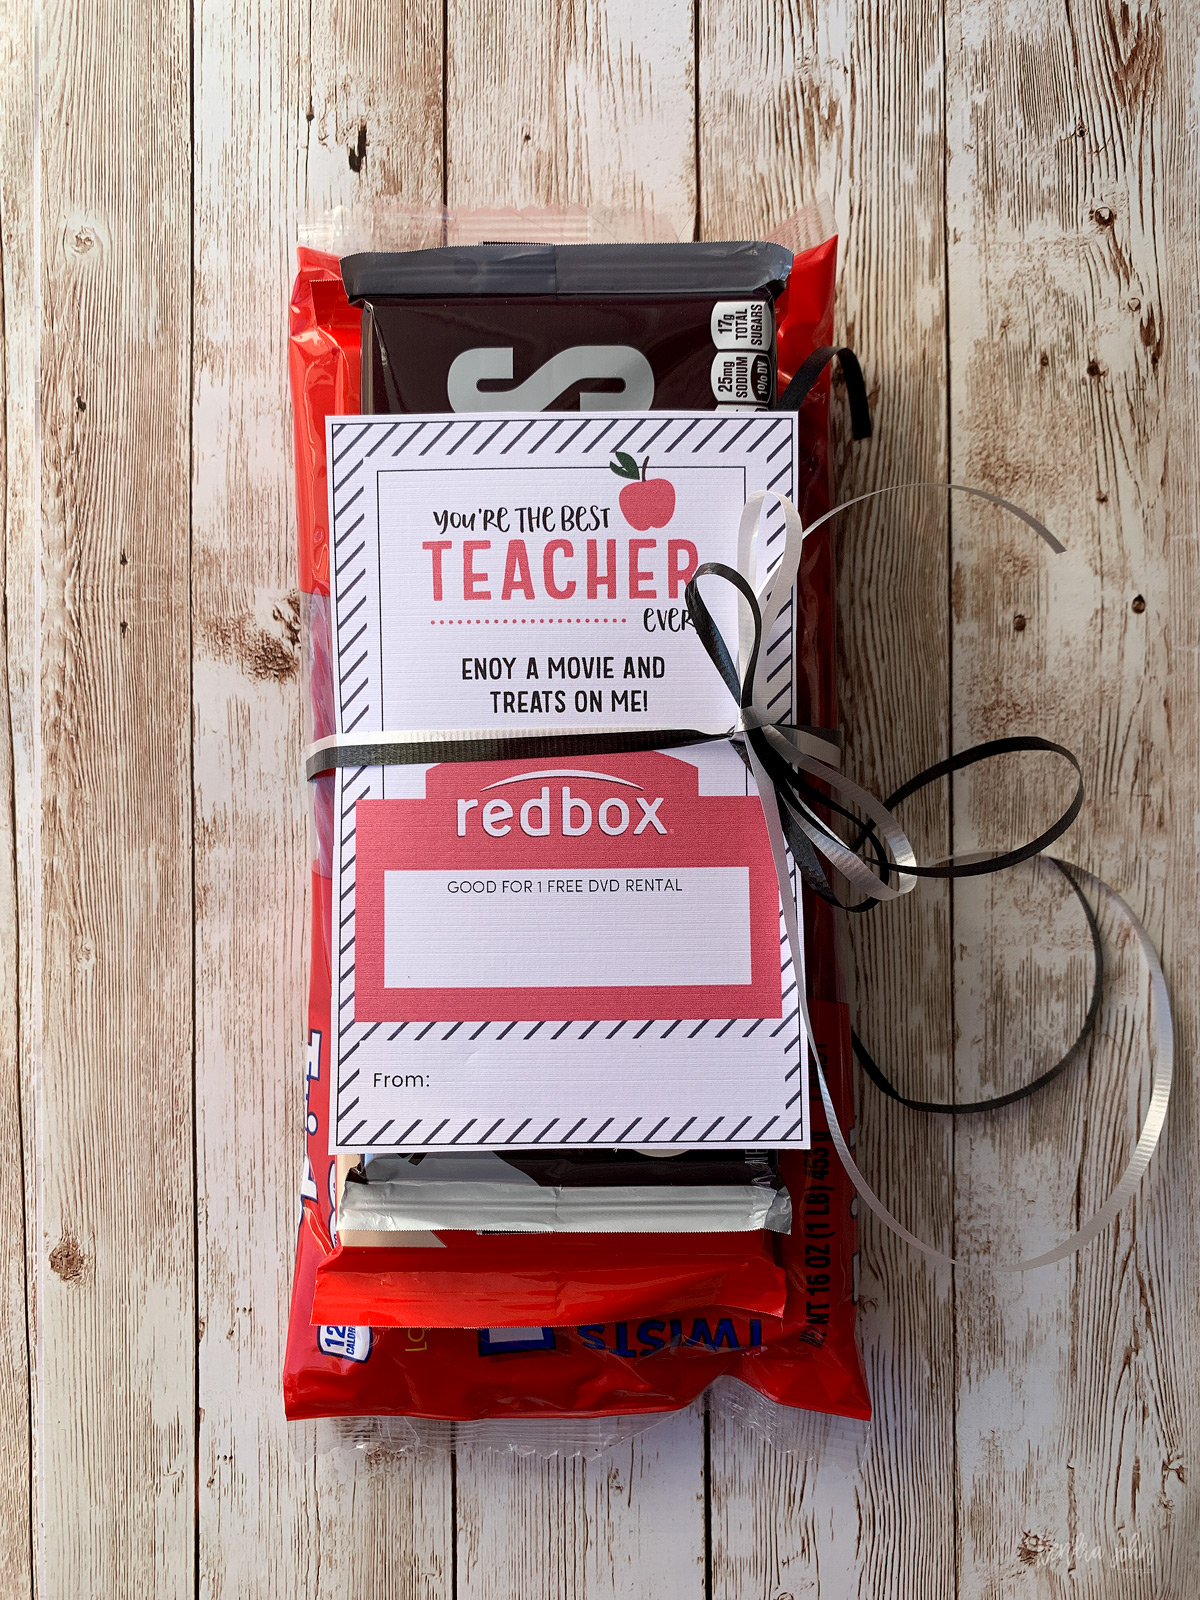 Redbox Gift for Teachers
